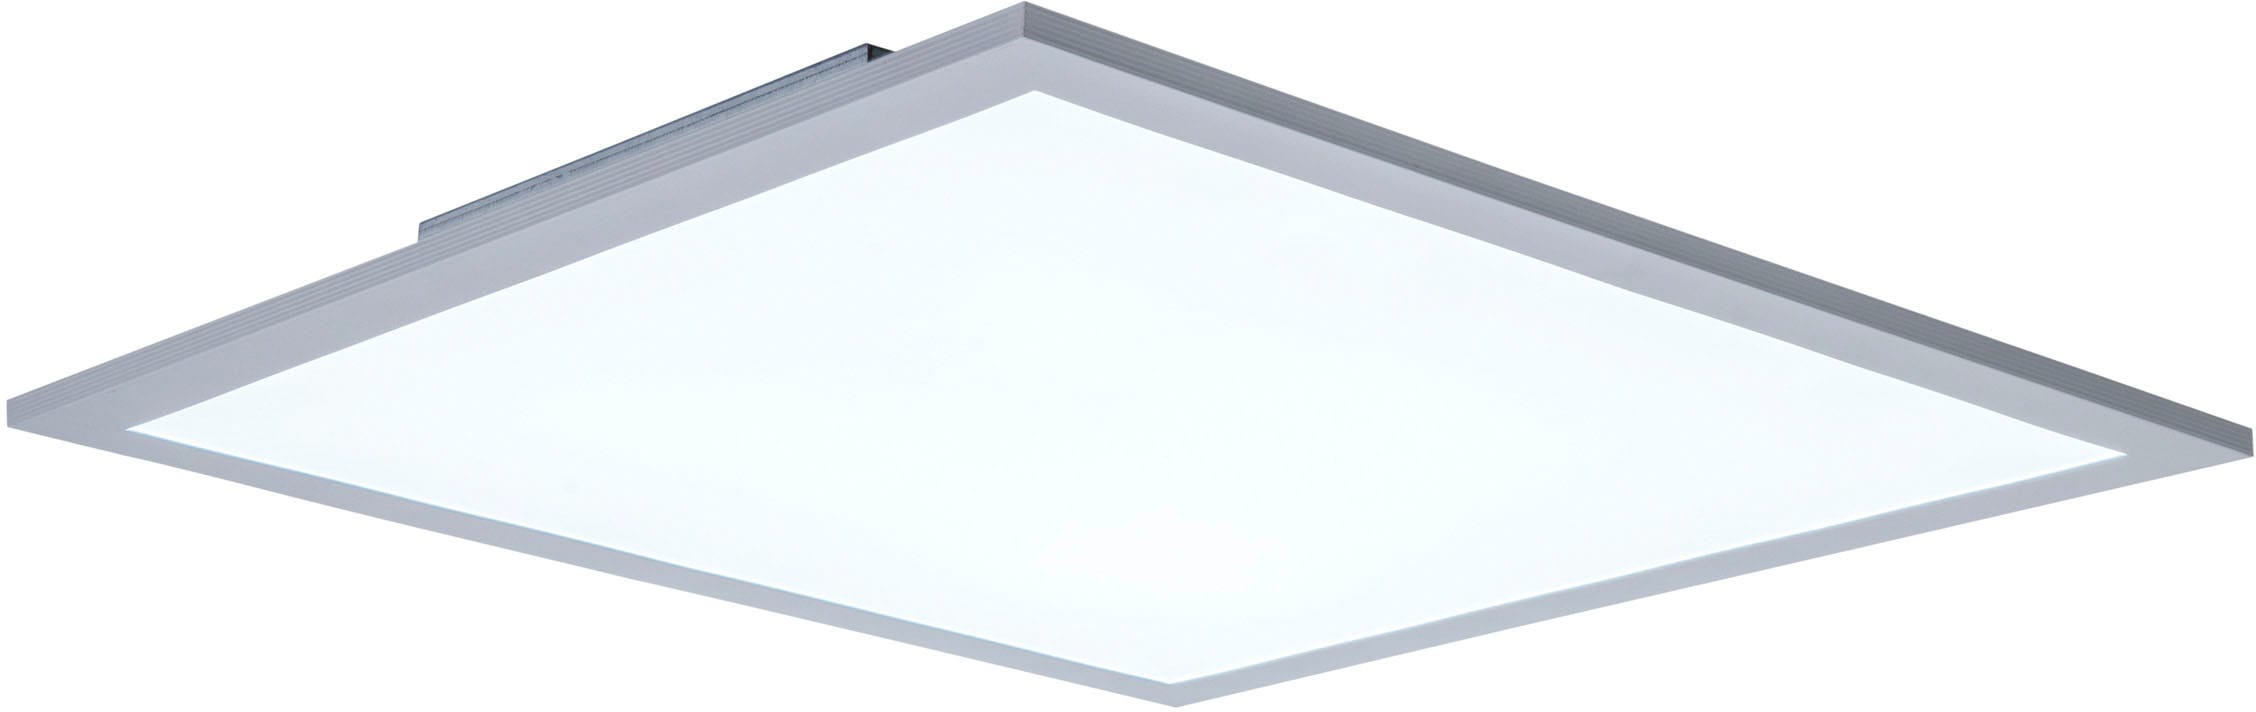 näve LED Panel »Nicola«, 1 flammig-flammig, Aufbaupanel weiß 45x45cm, H: 6cm, 120 LED, Lichtfarbe neutralweiß